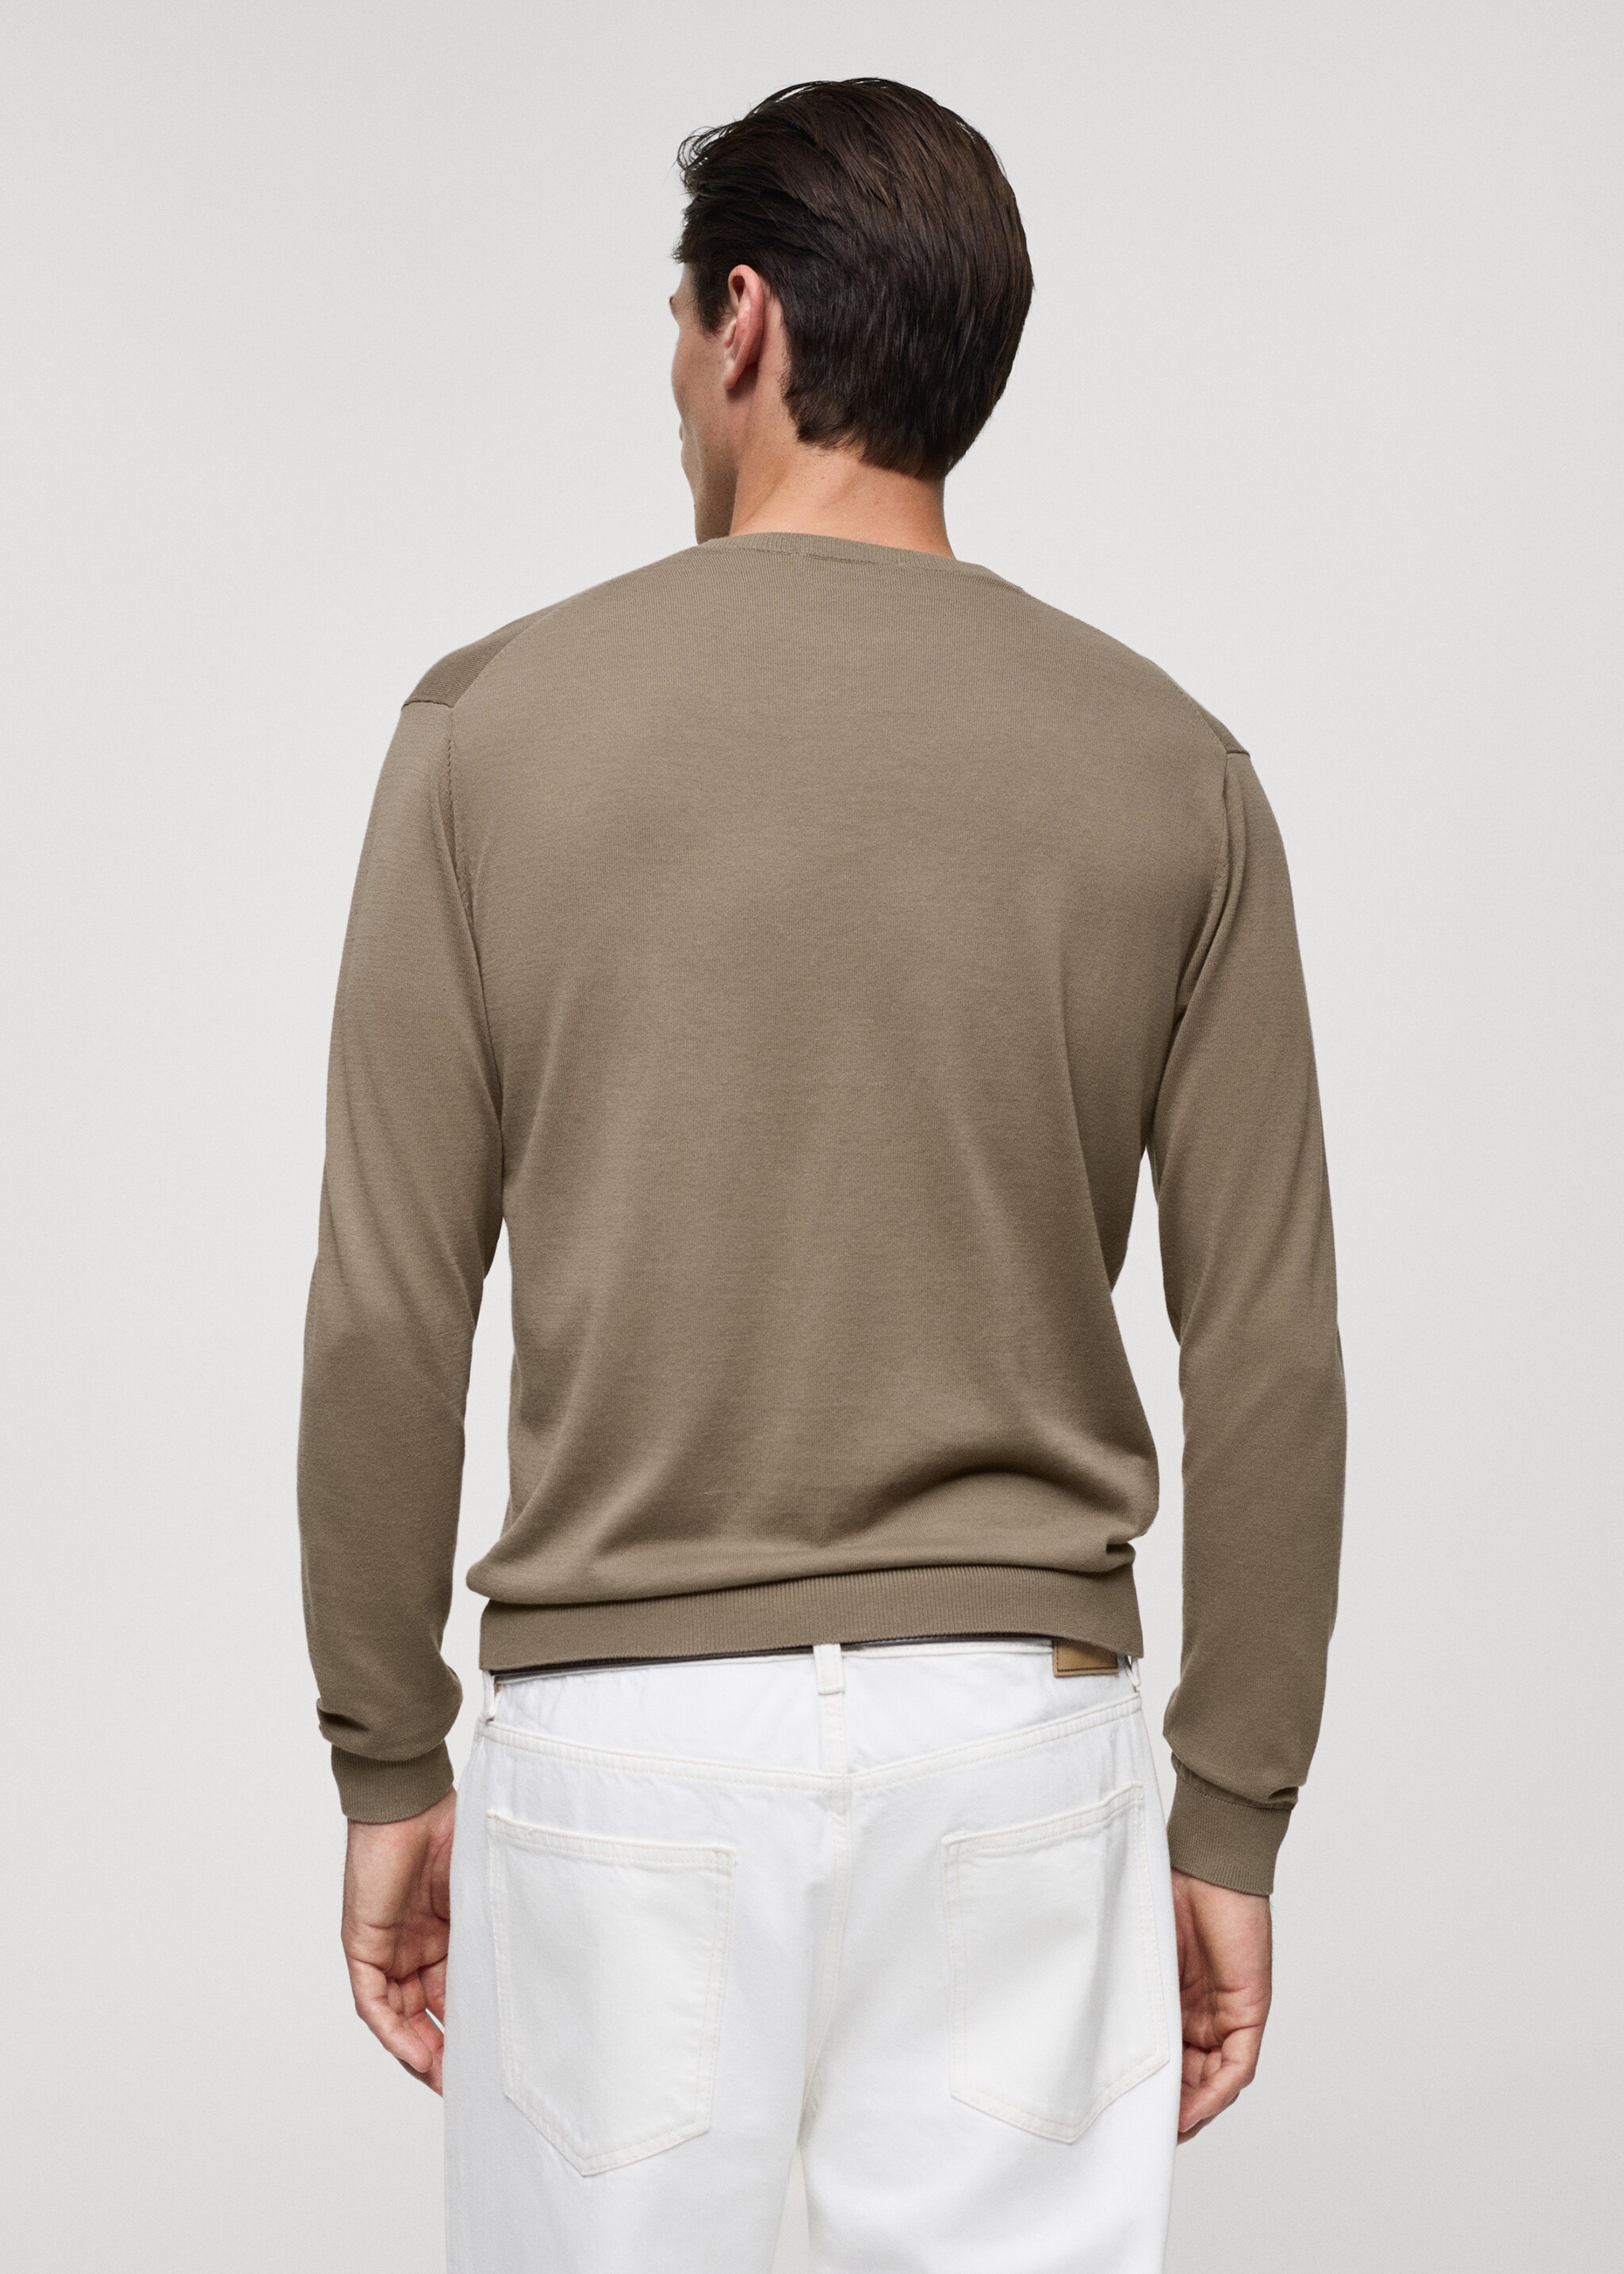 100% cotton fine-knit sweater - Обратная сторона изделия